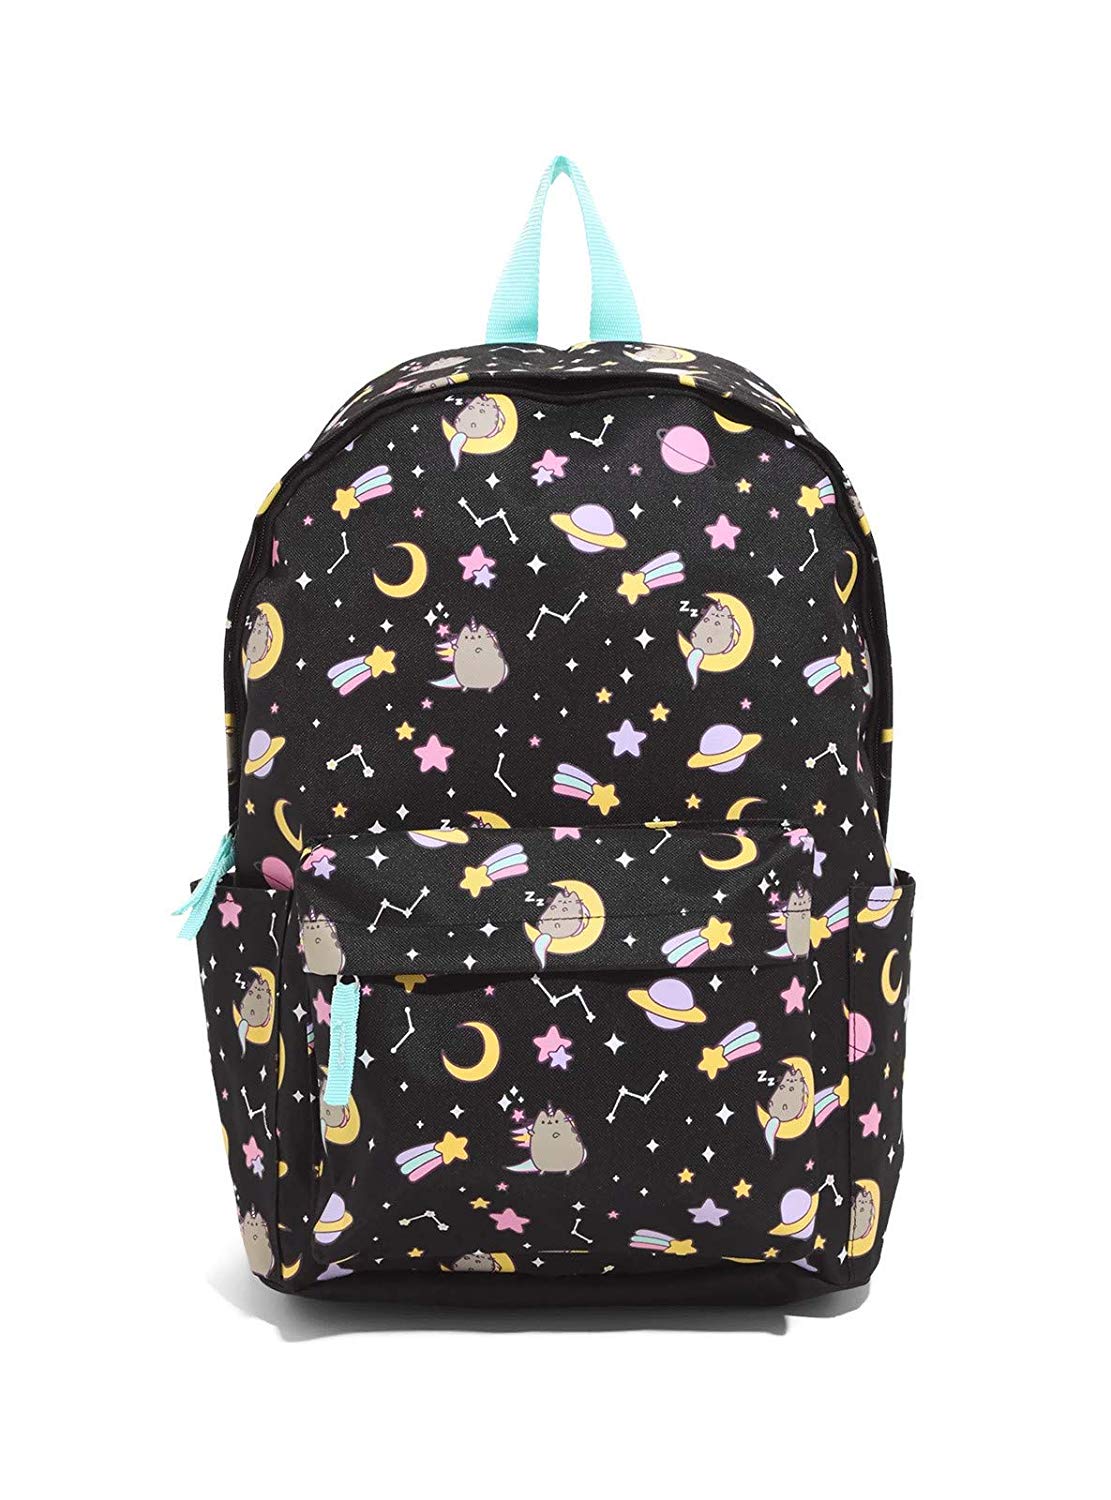 Pusheen Constellation Backpack | eBay